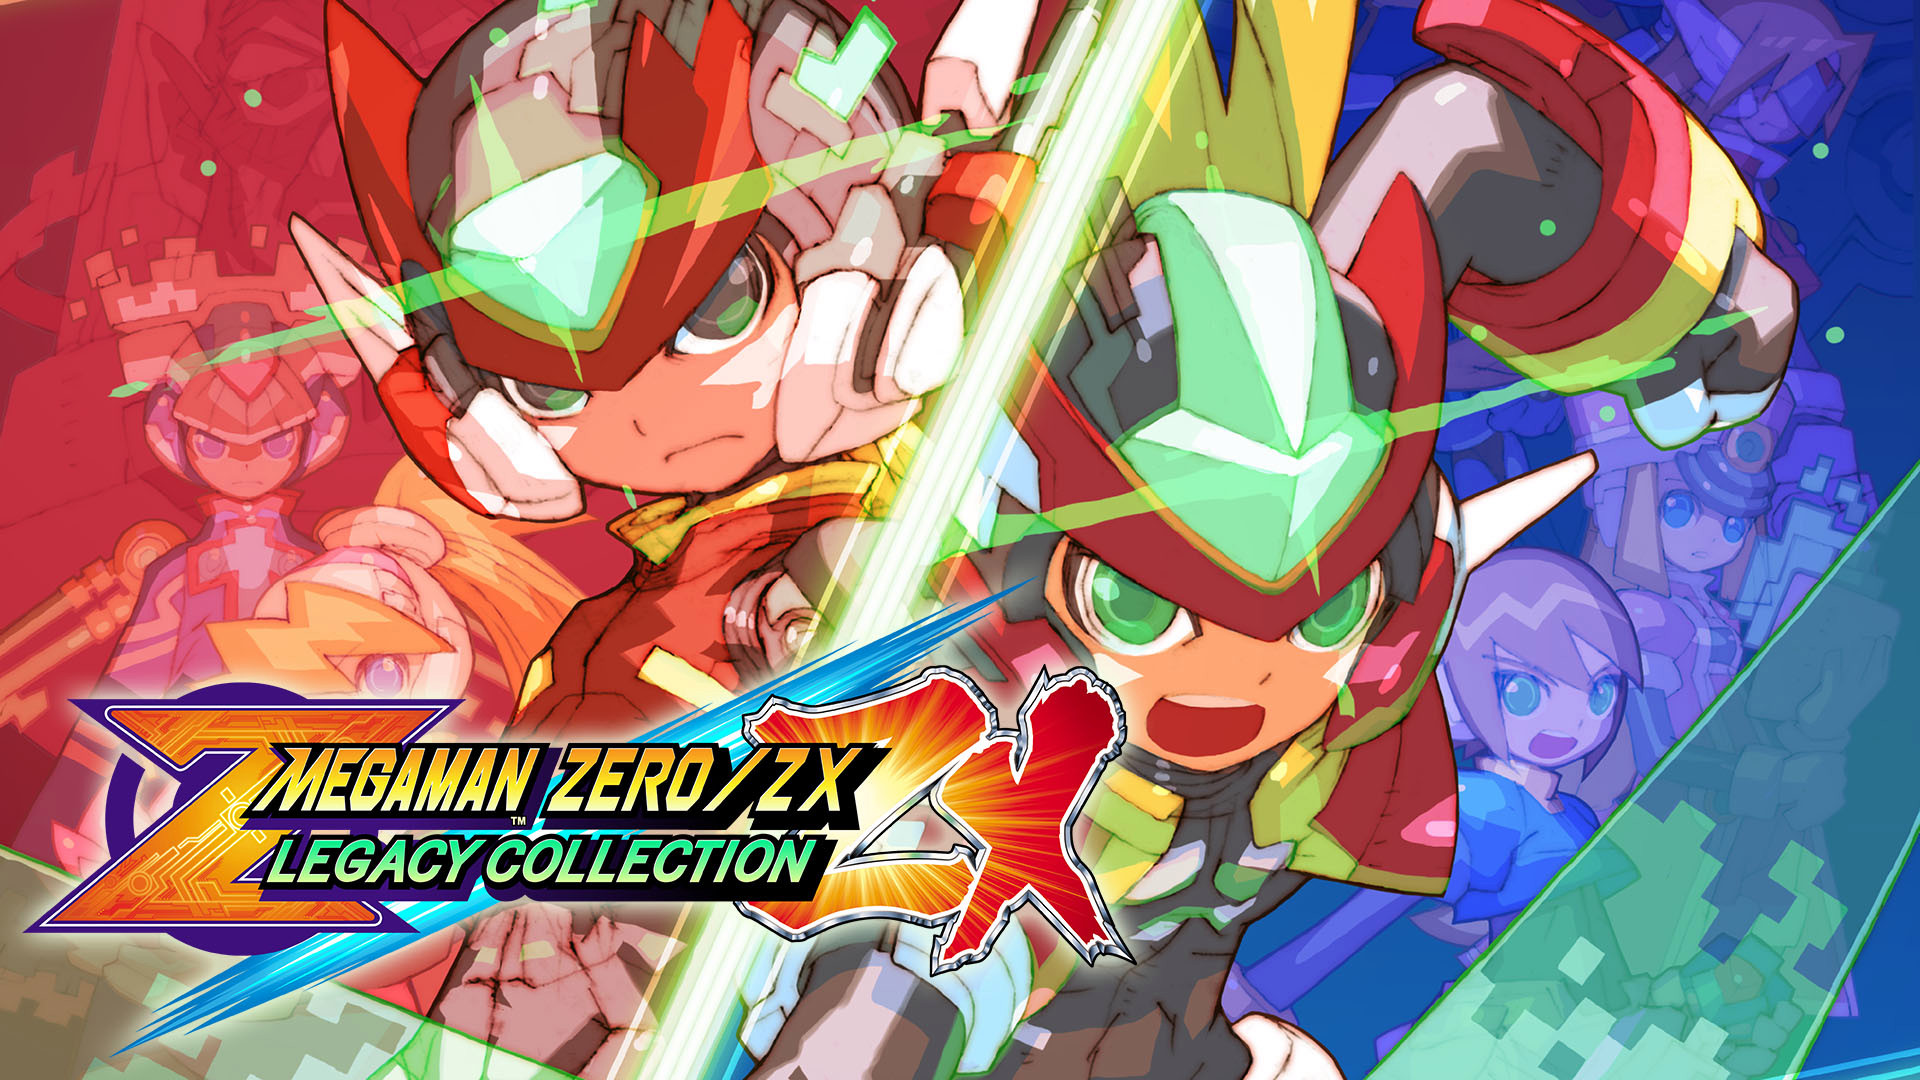 Koleksi Mega Man Zero / ZX Legacy Lands di Xbox One 21 Januari 2020